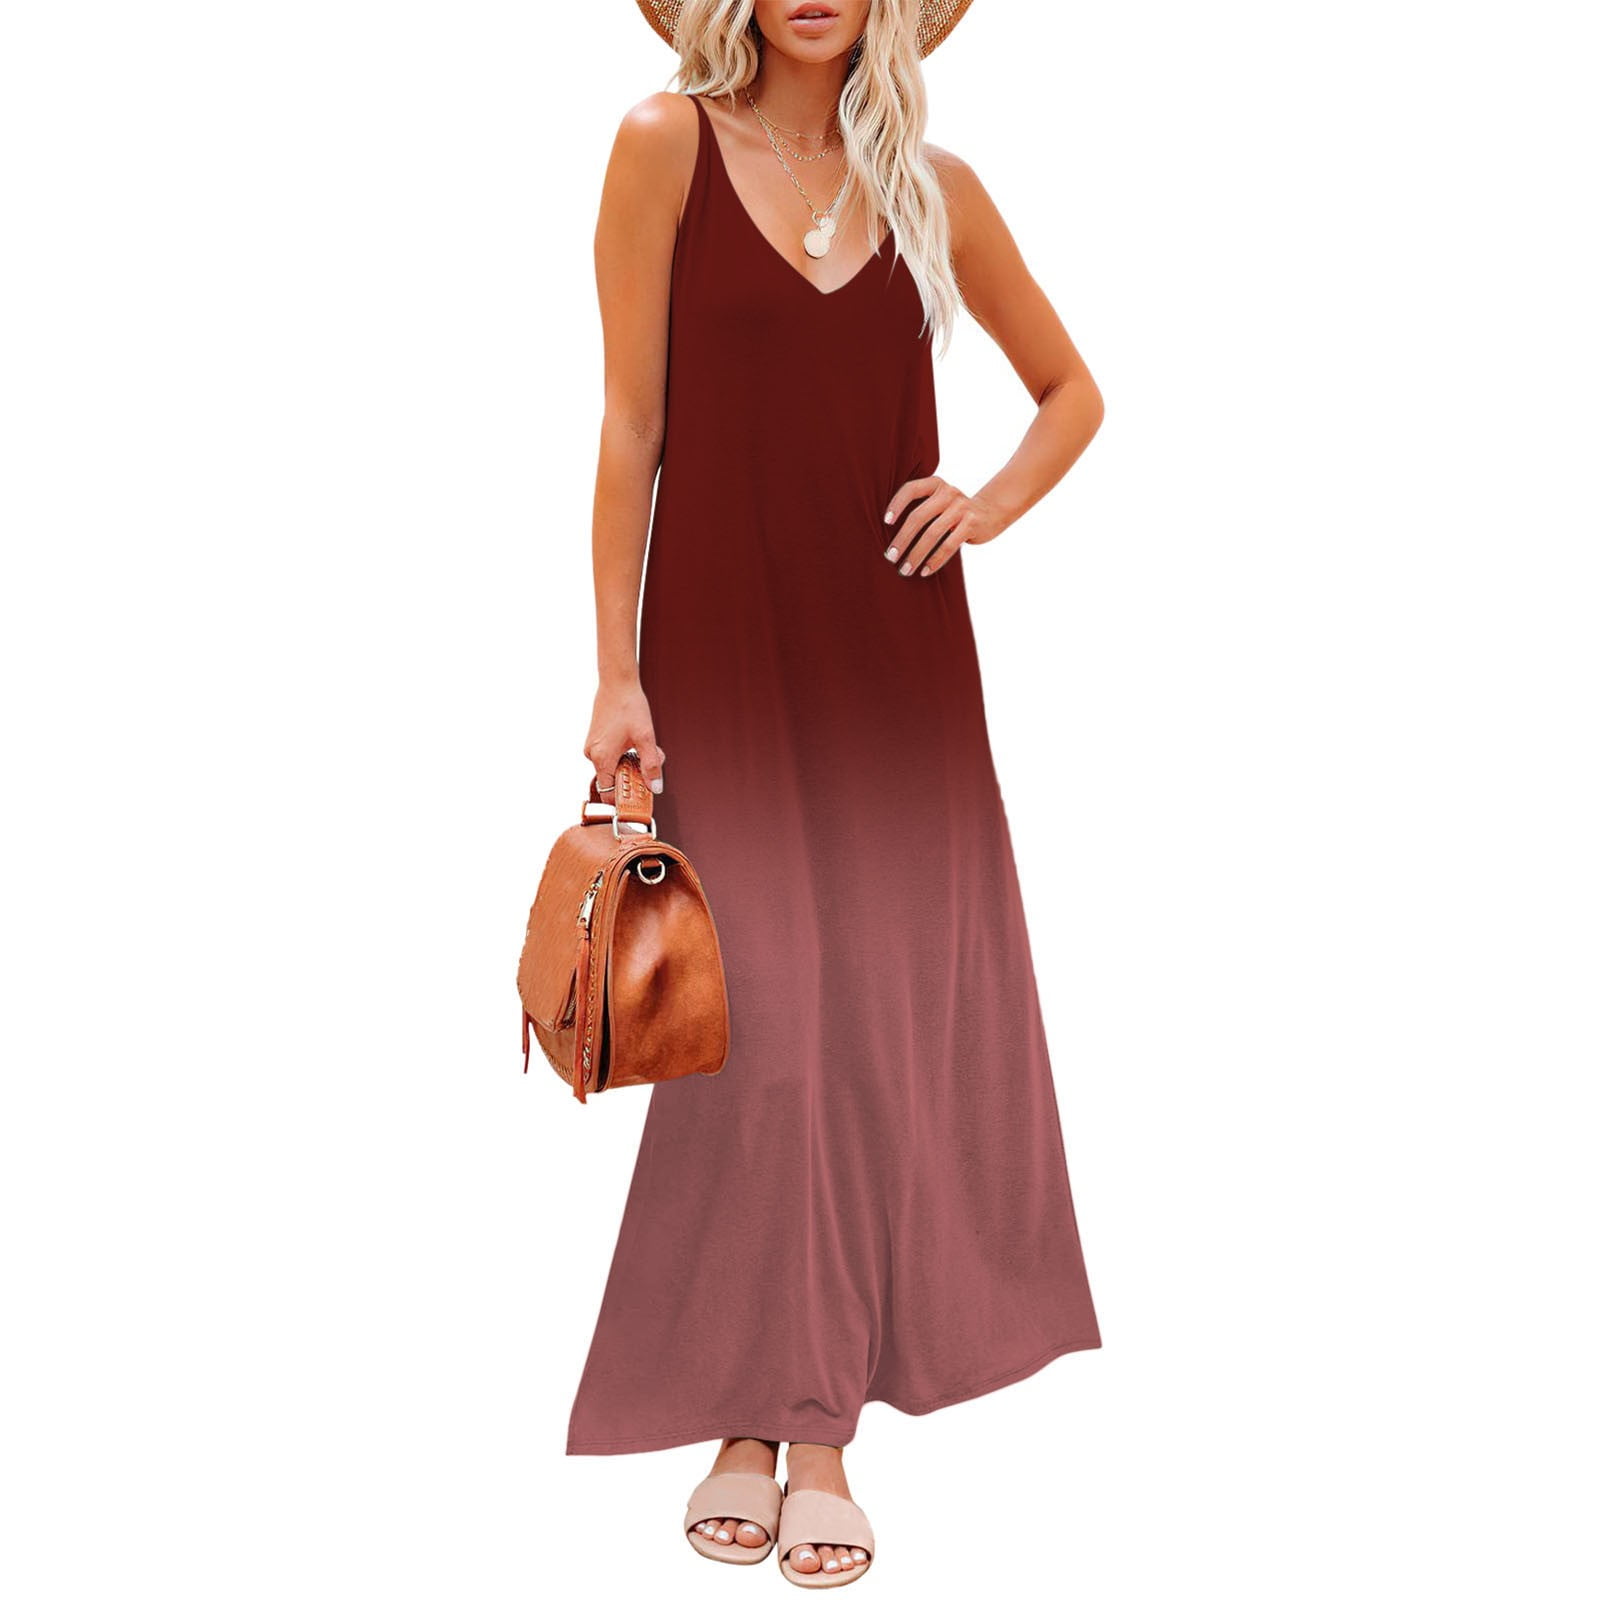 BEEYASO Clearance Summer Dresses for Women Ankle Length Sleeveless